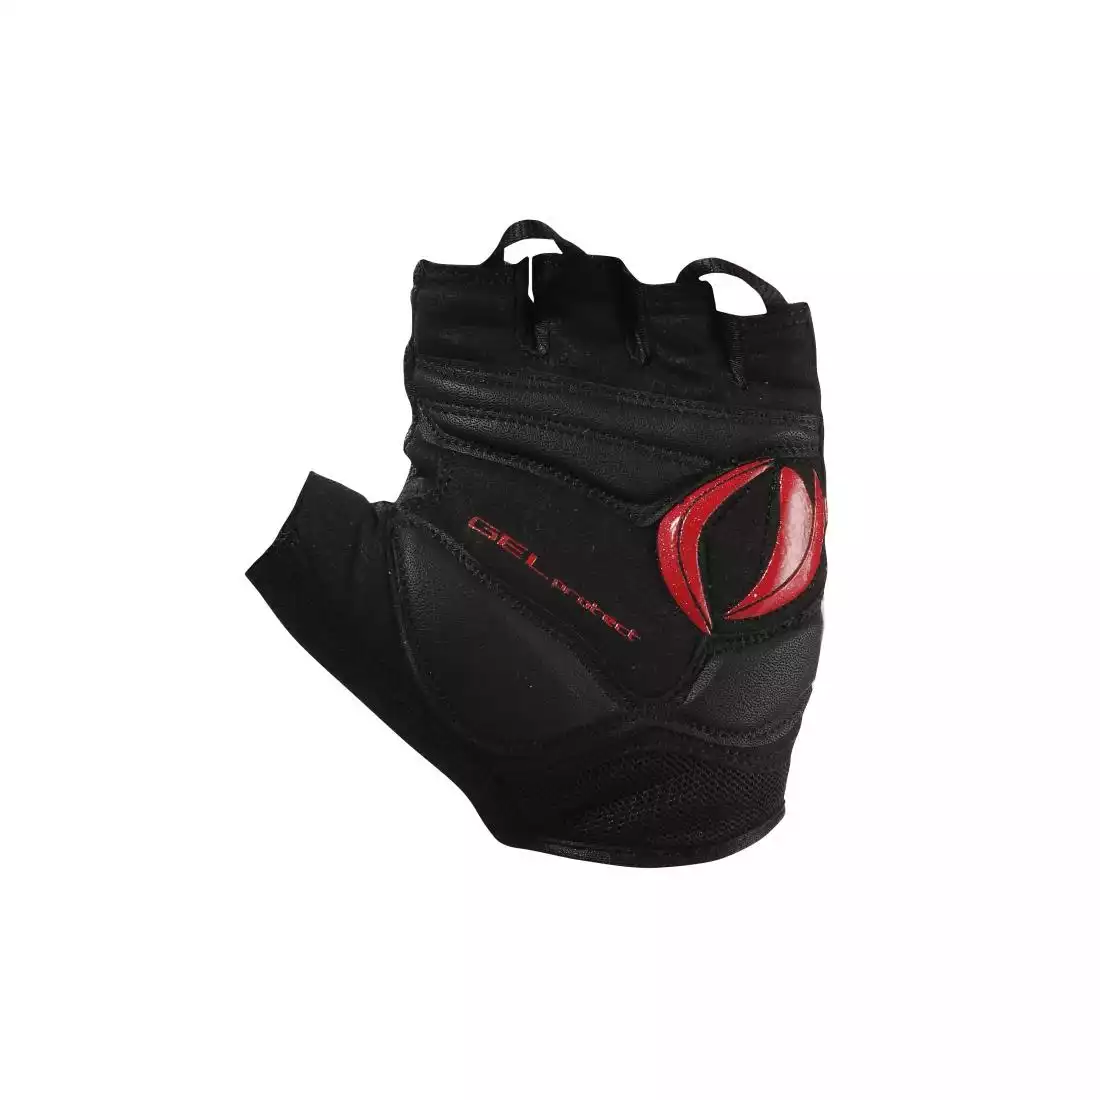 CHIBA GEL PRO Cycling gloves, black